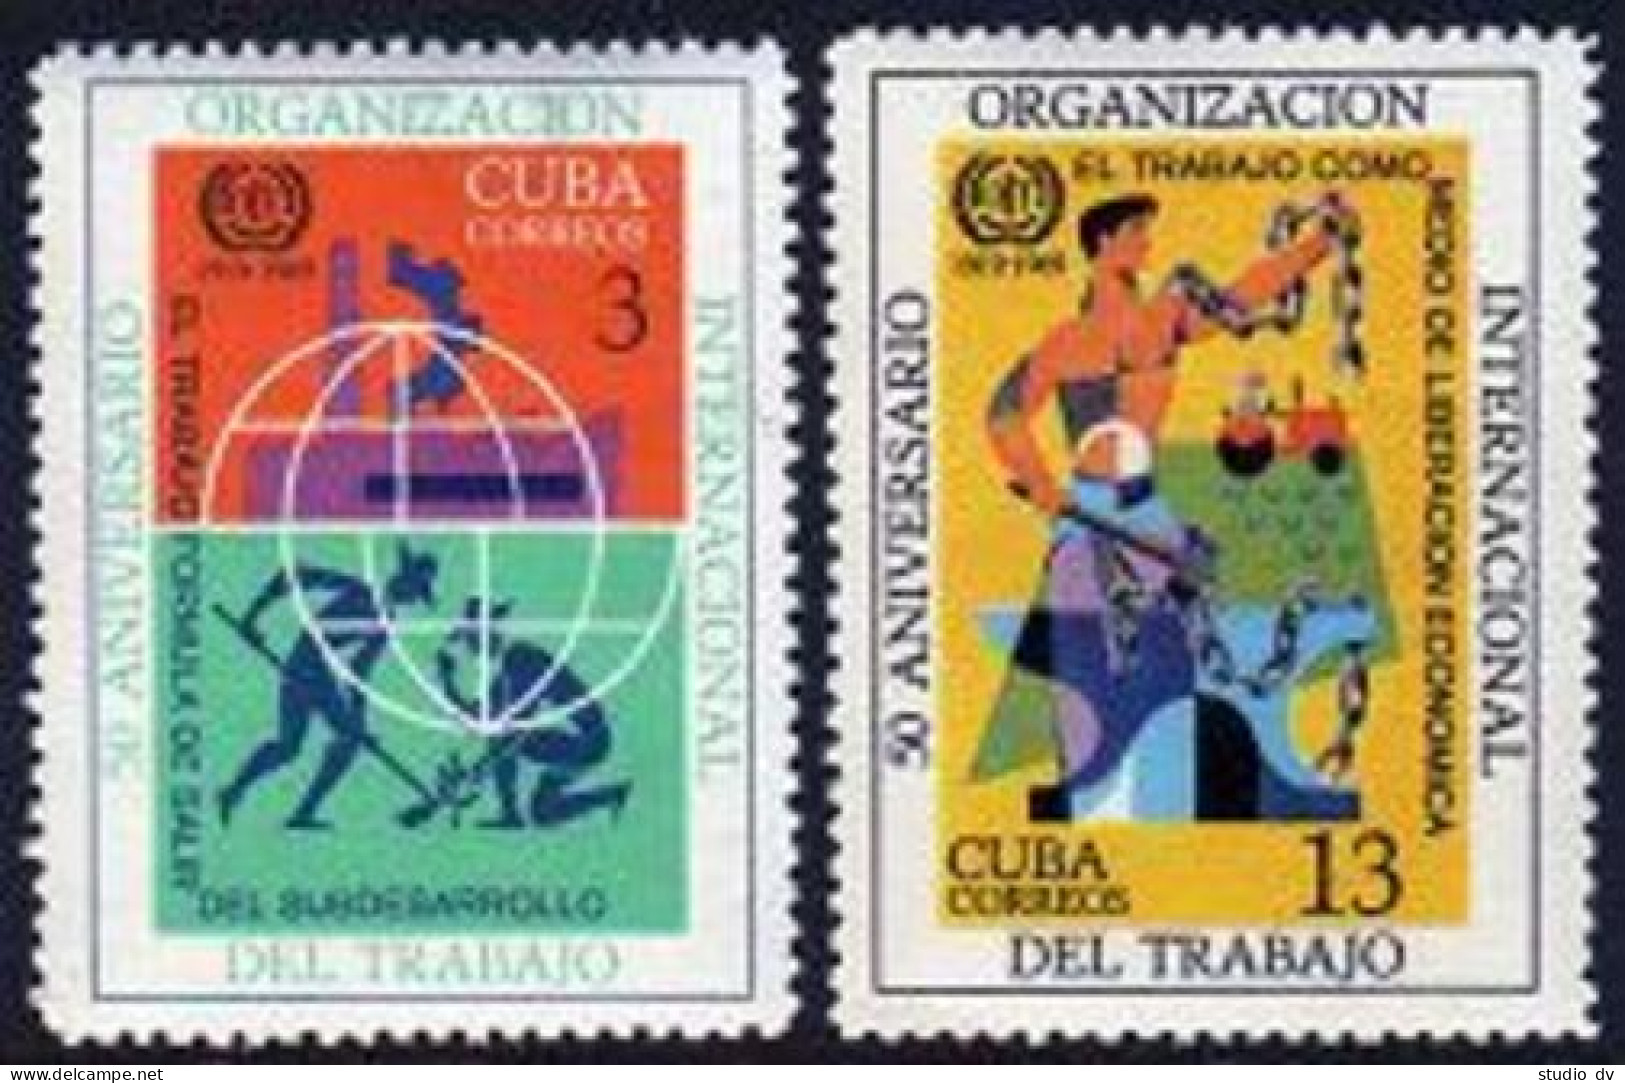 Cuba 1402-1403,MNH.Michel 1471-1472. Labor Organization ILO-50,1969. - Neufs